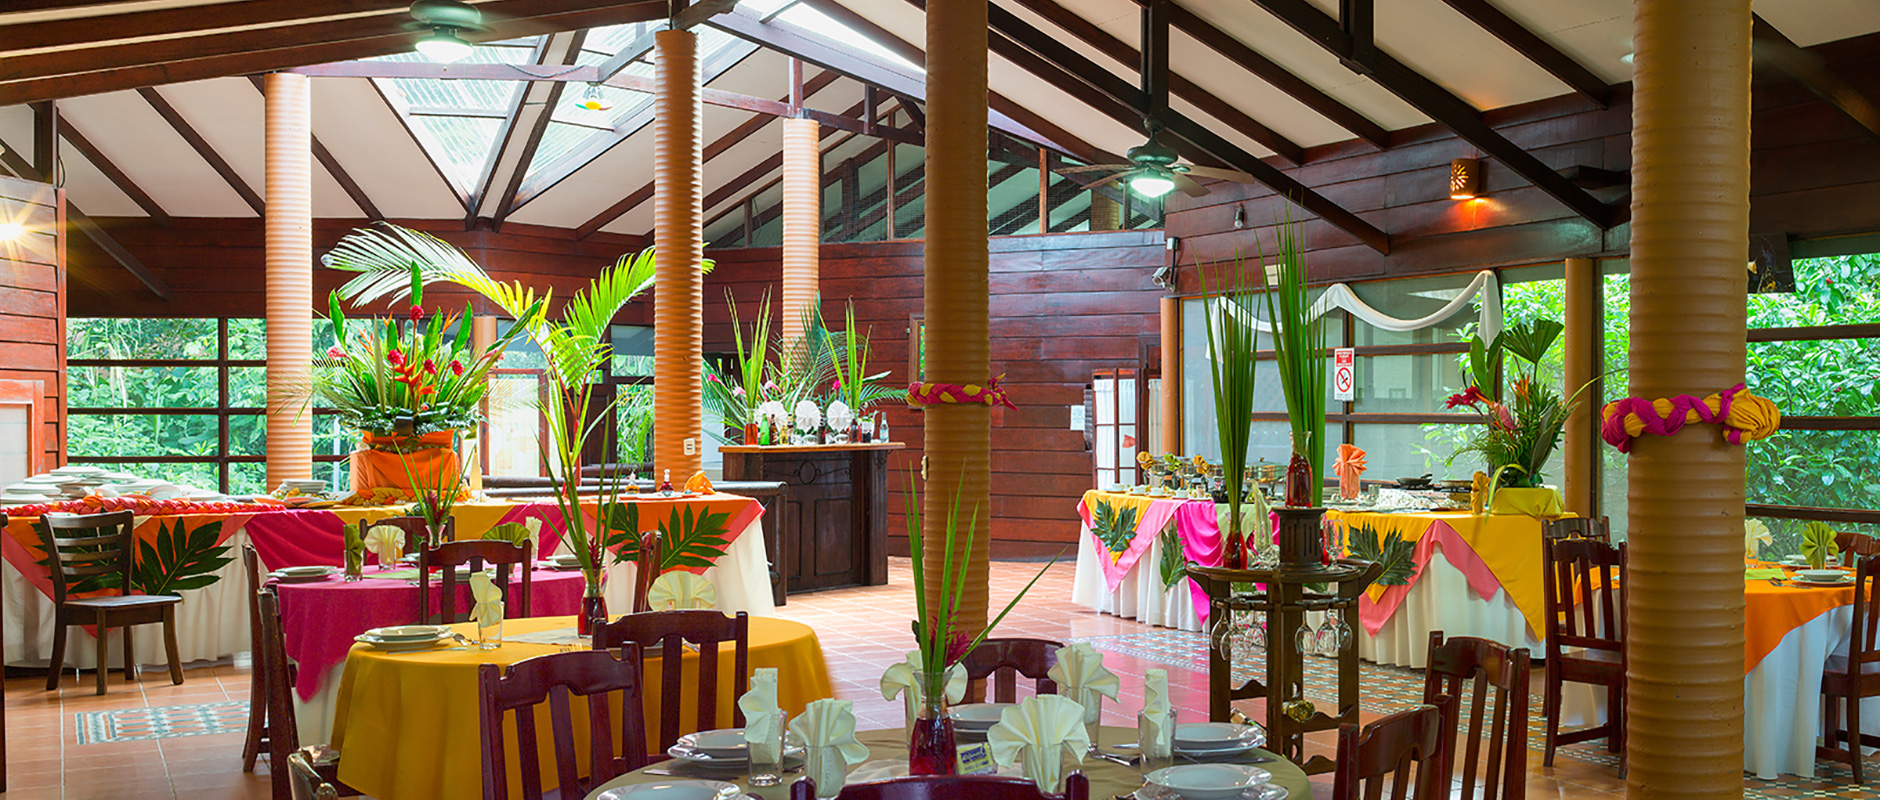 Aninga Lodge Restaurant